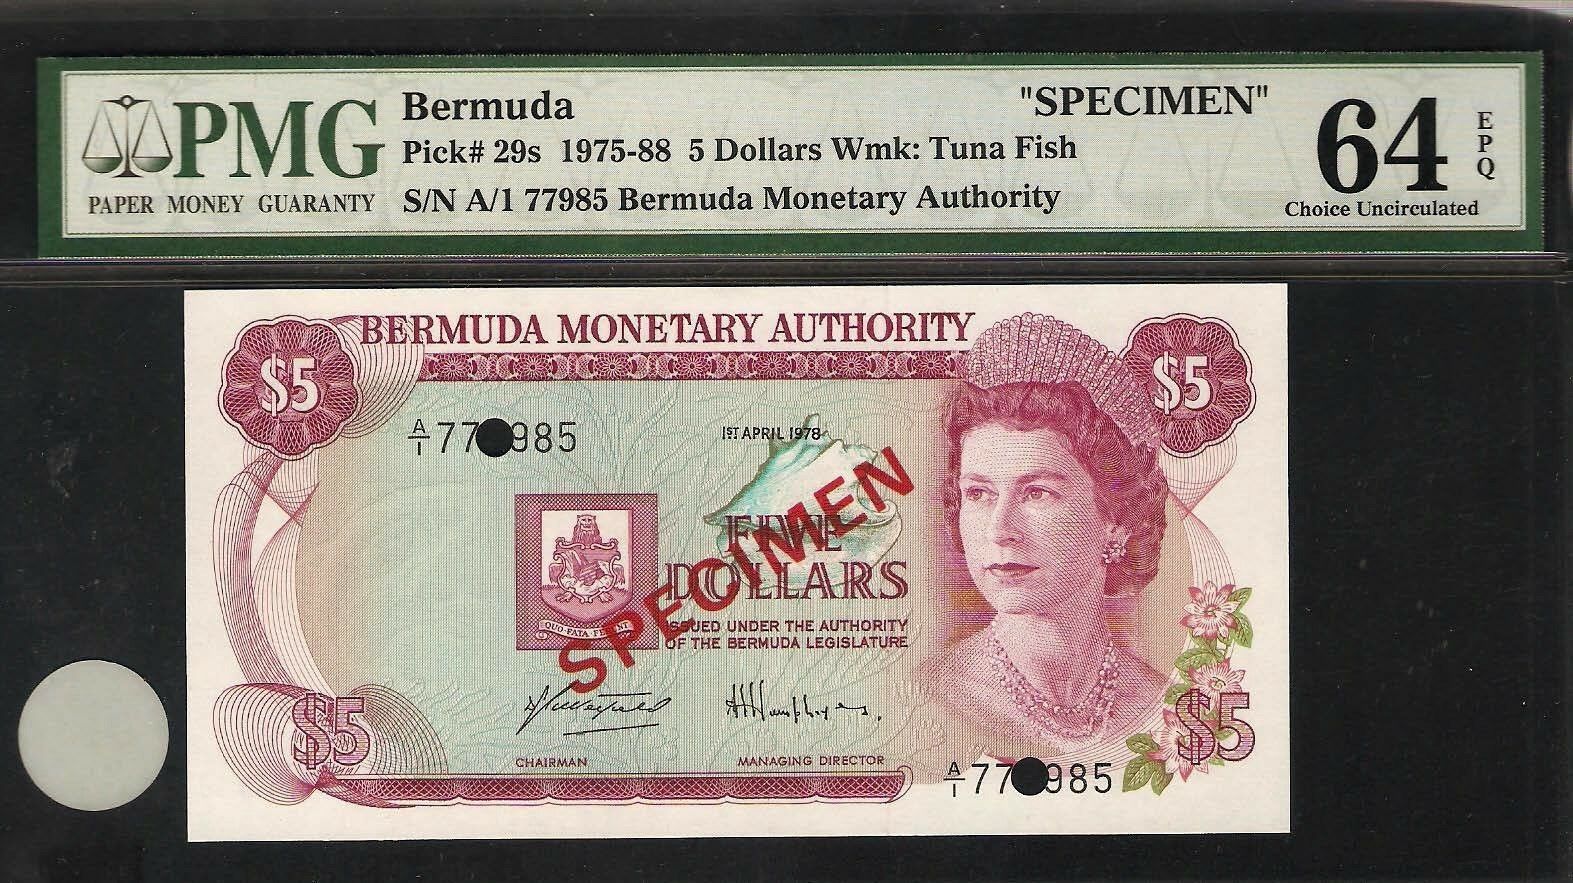 Bermuda 5 Dollars 1975 - 88  SPECIMEN PMG 64 EPQ UNC Pick# 29s